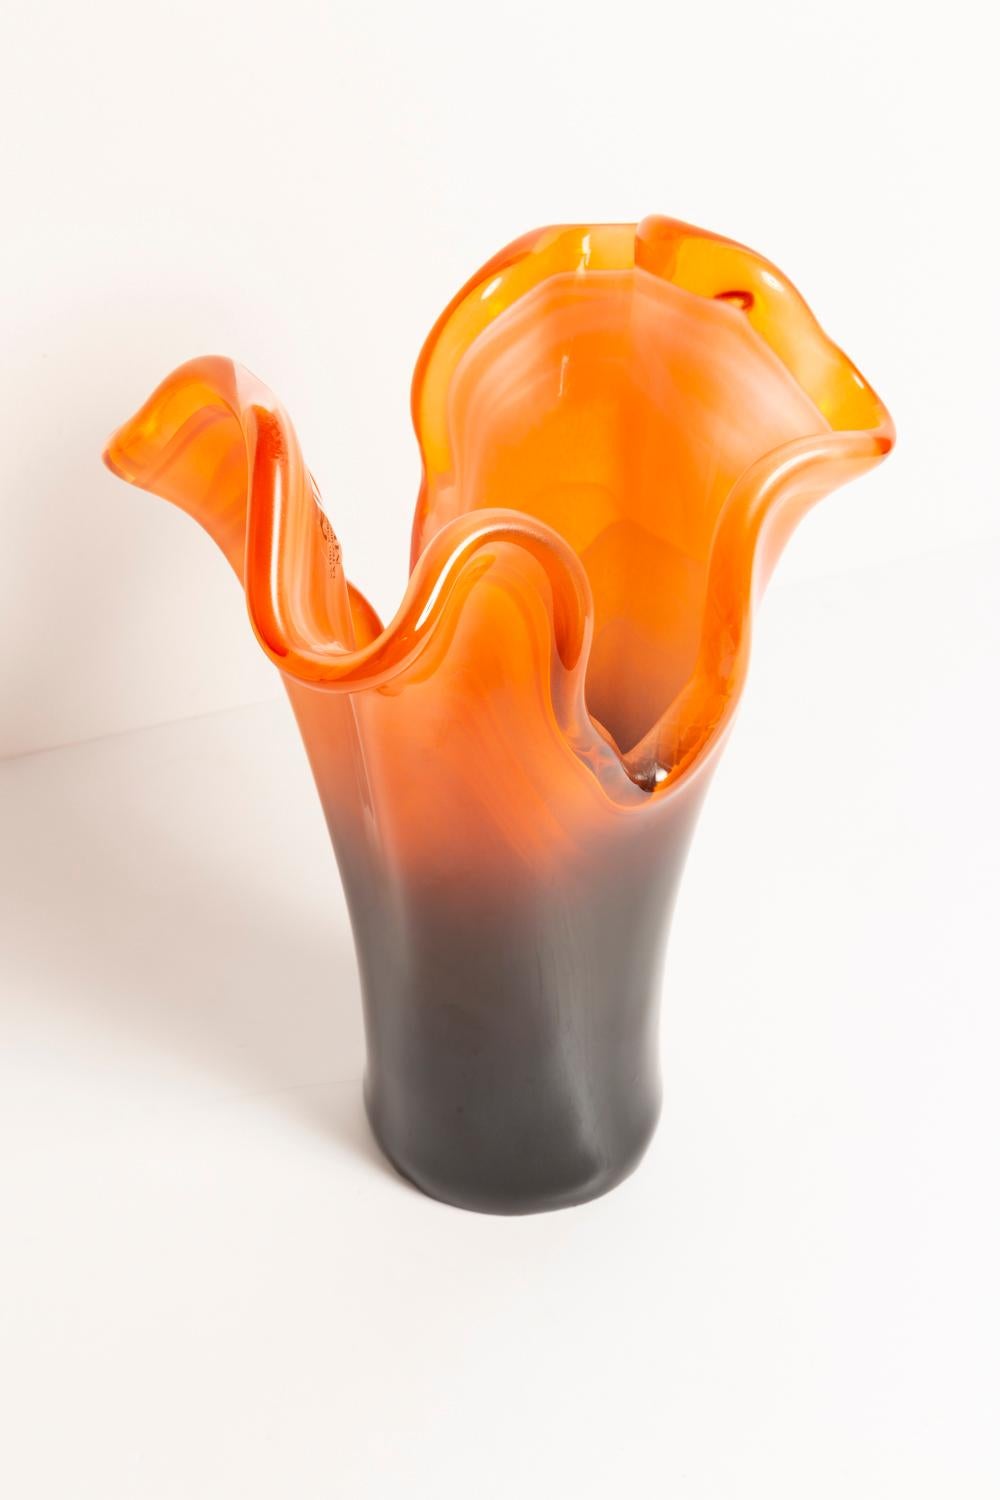 Midcentury Vintage Orange and Black Murano Glass Vase, Italy, 2000s For Sale 5